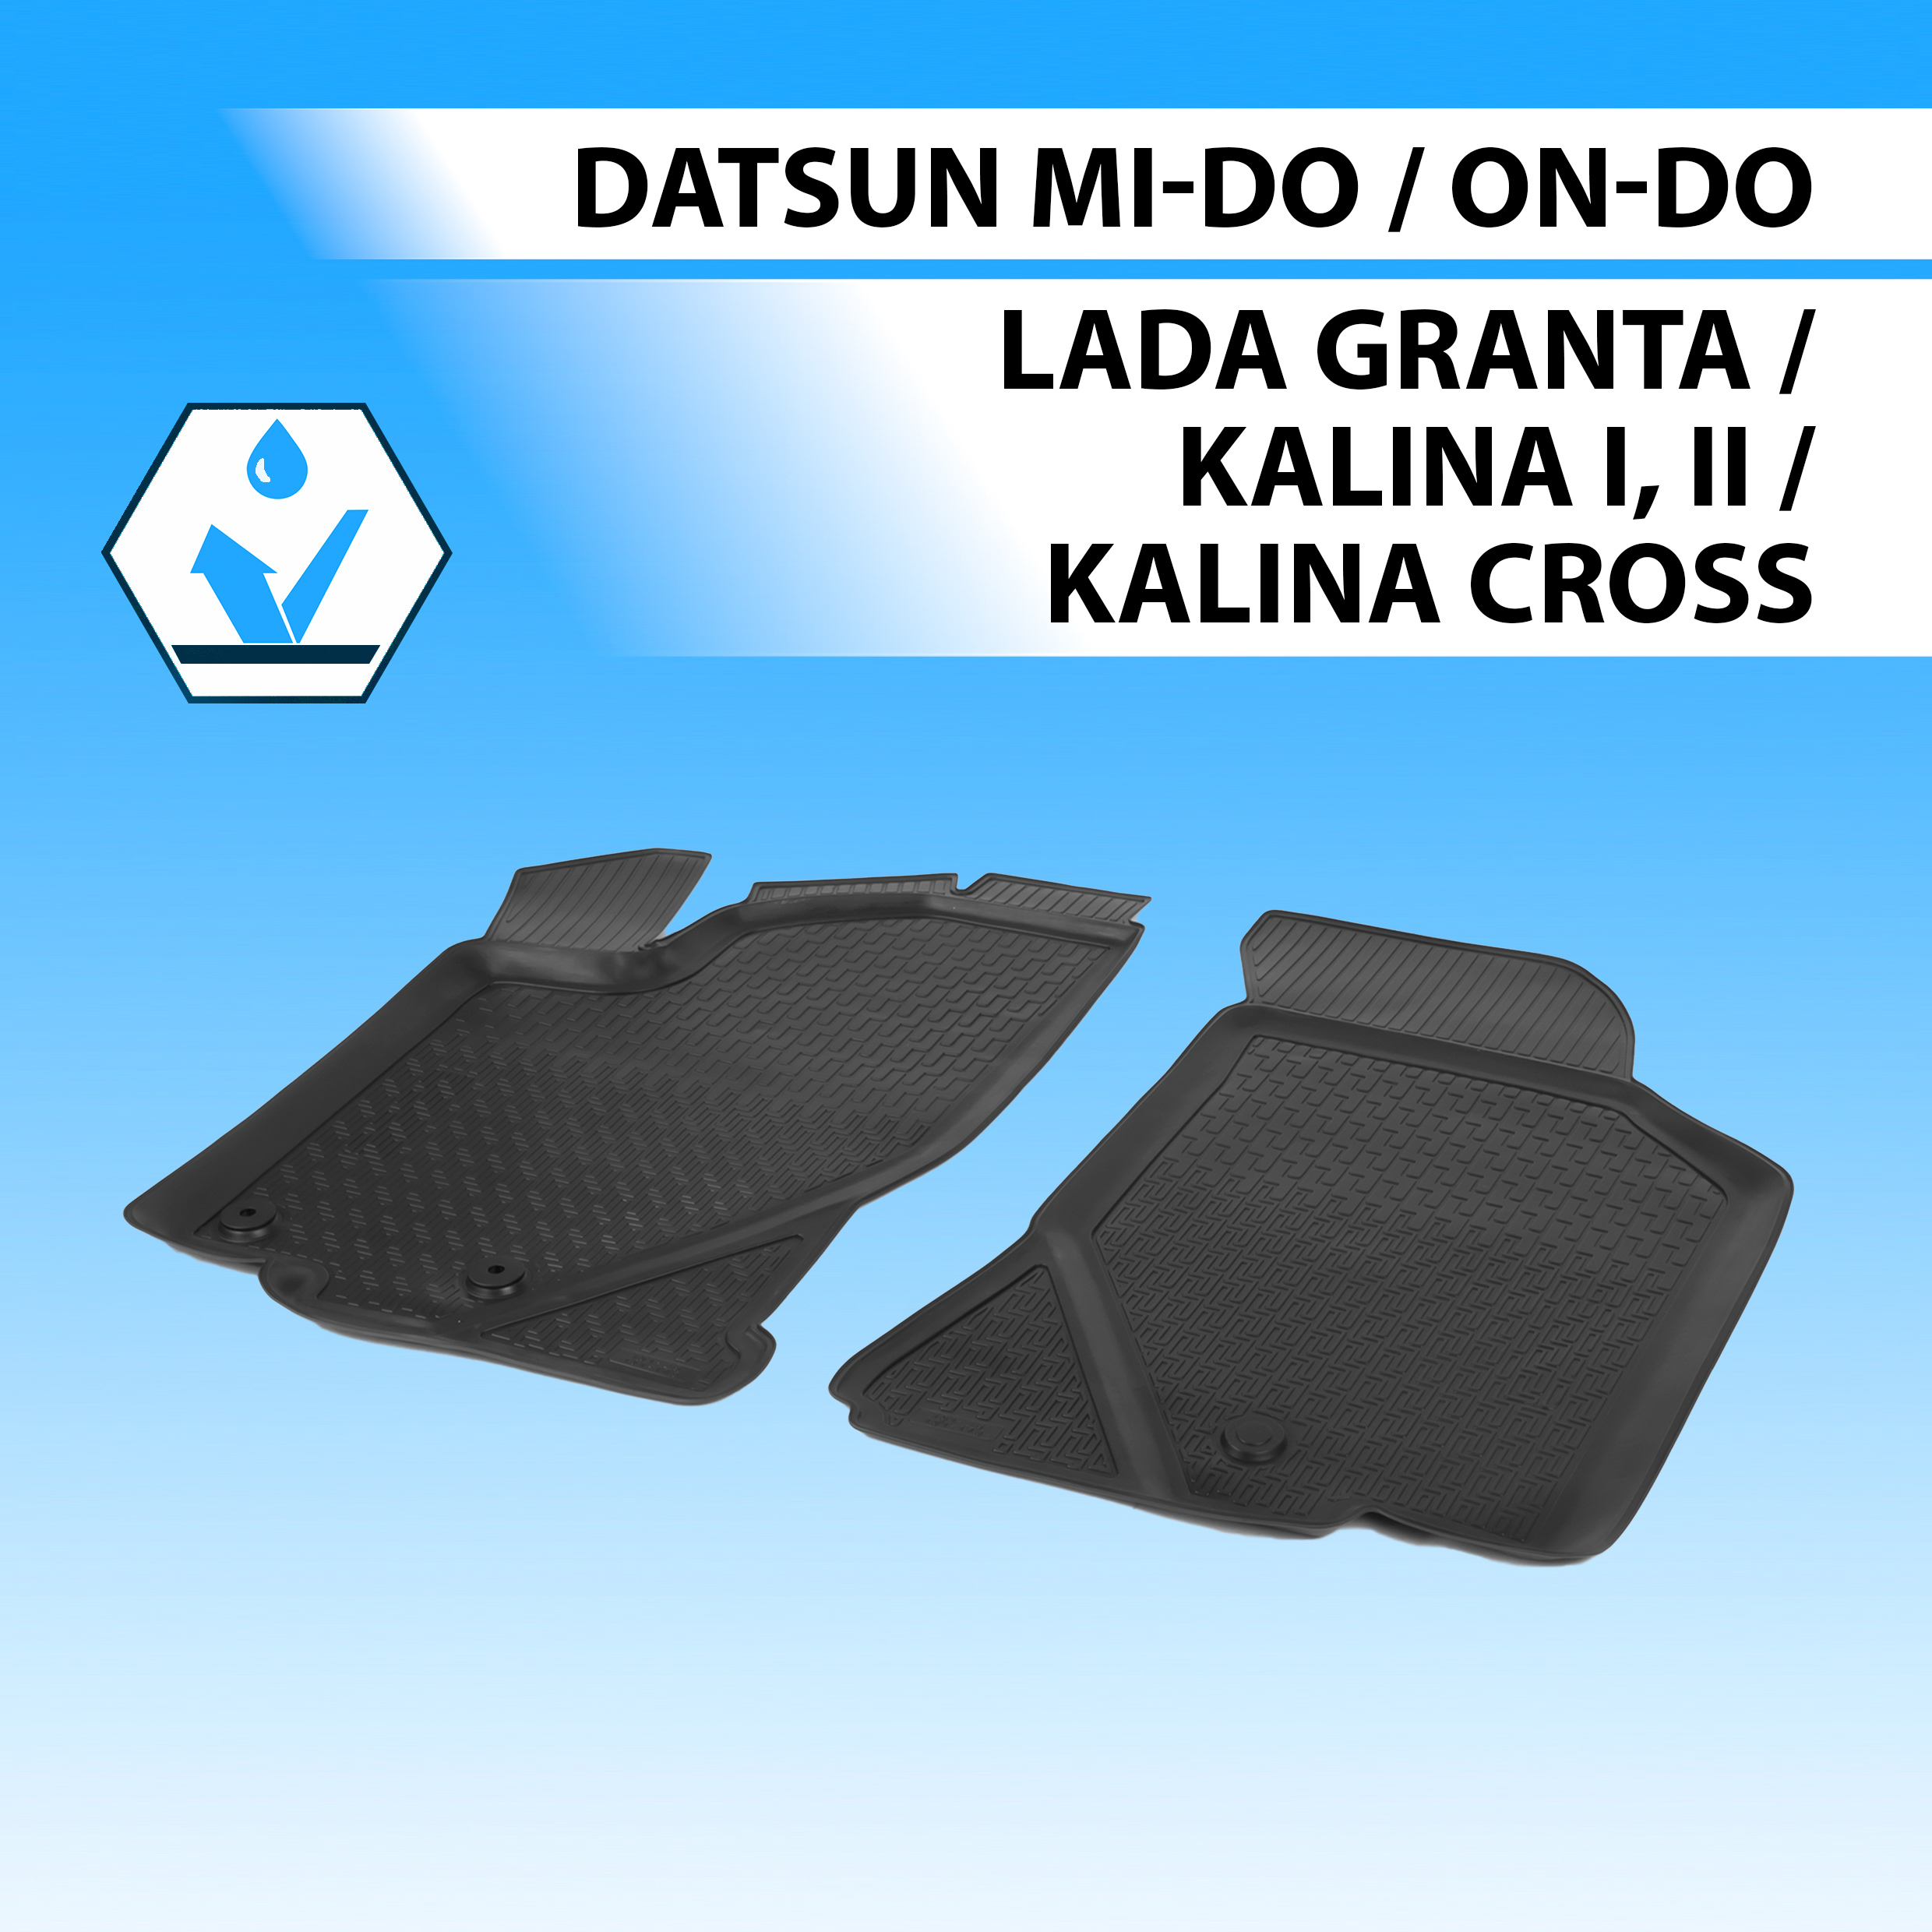 Коврики в салон передние Rival Datsun mi-DO/on-DO/Lada Granta/Kalina вкл.Cross, 16001005